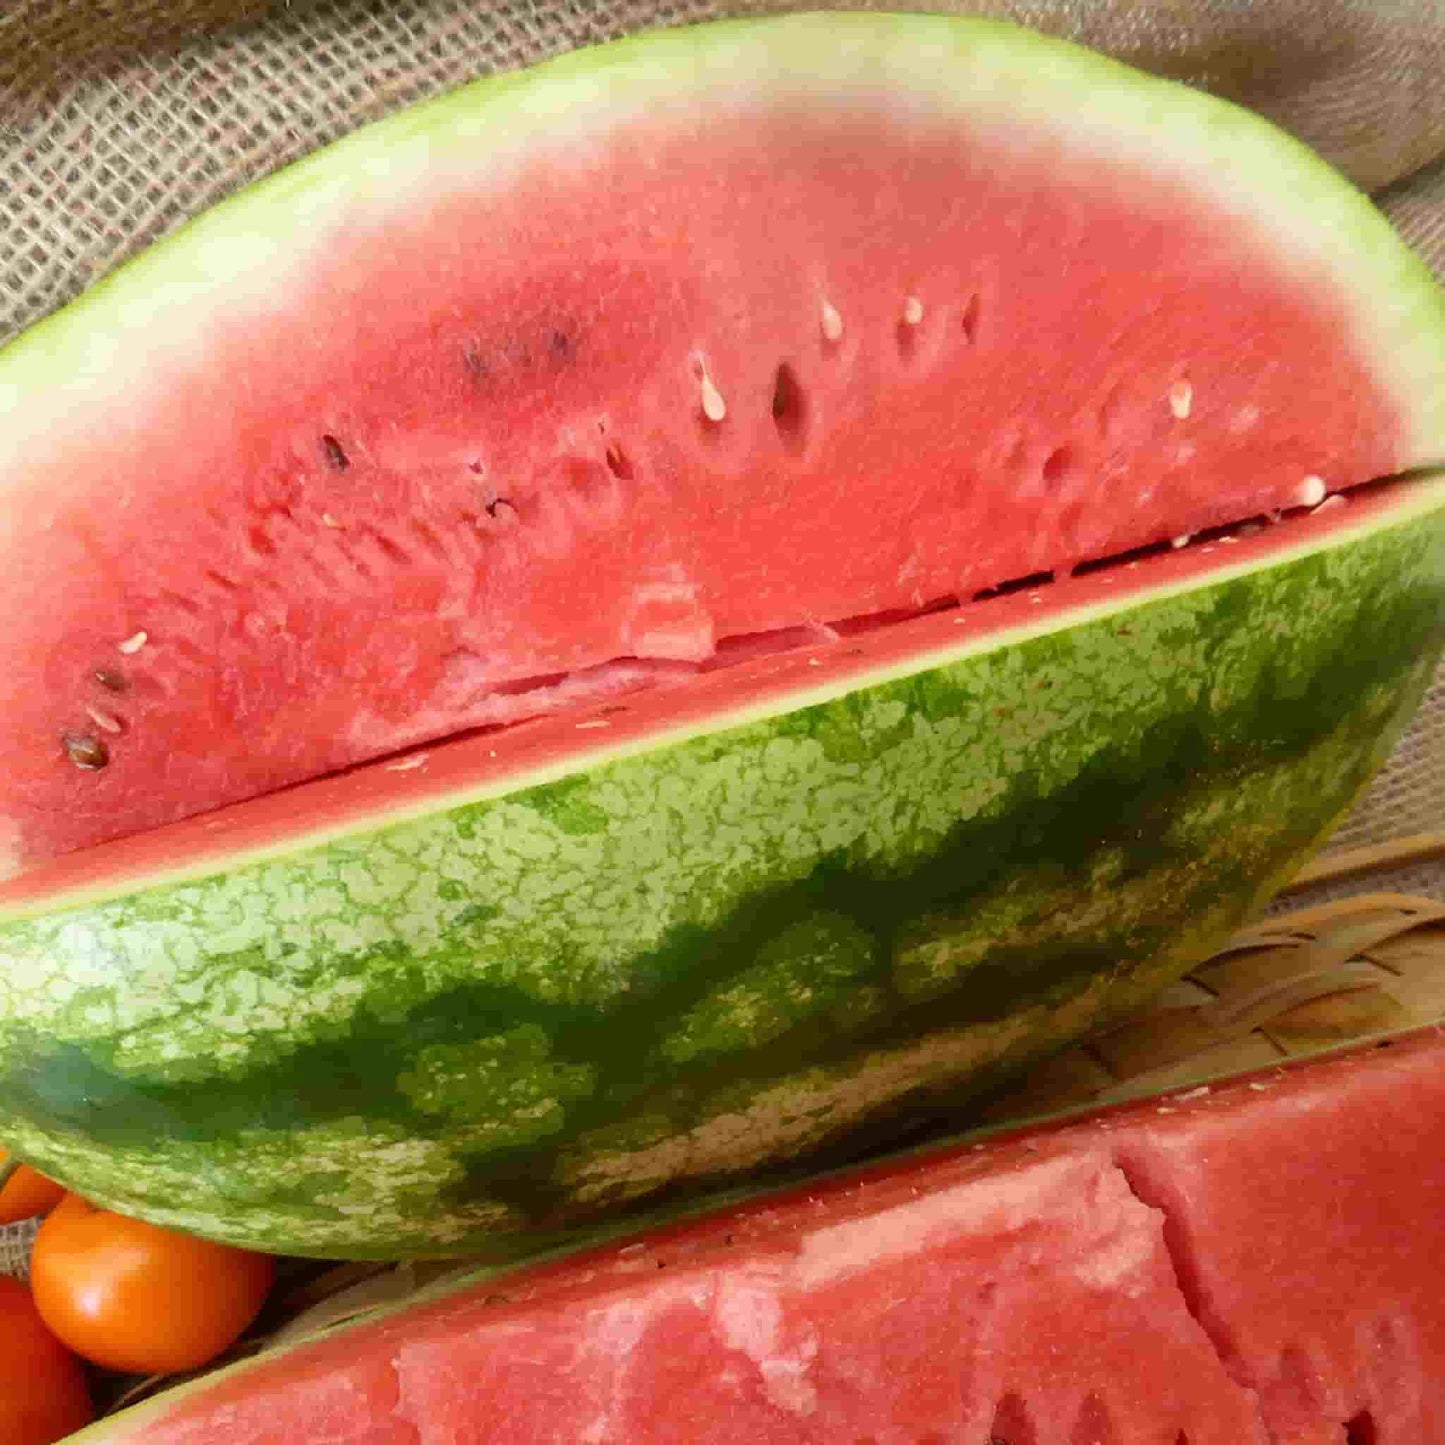 Crimson Sweet watermelon closeup